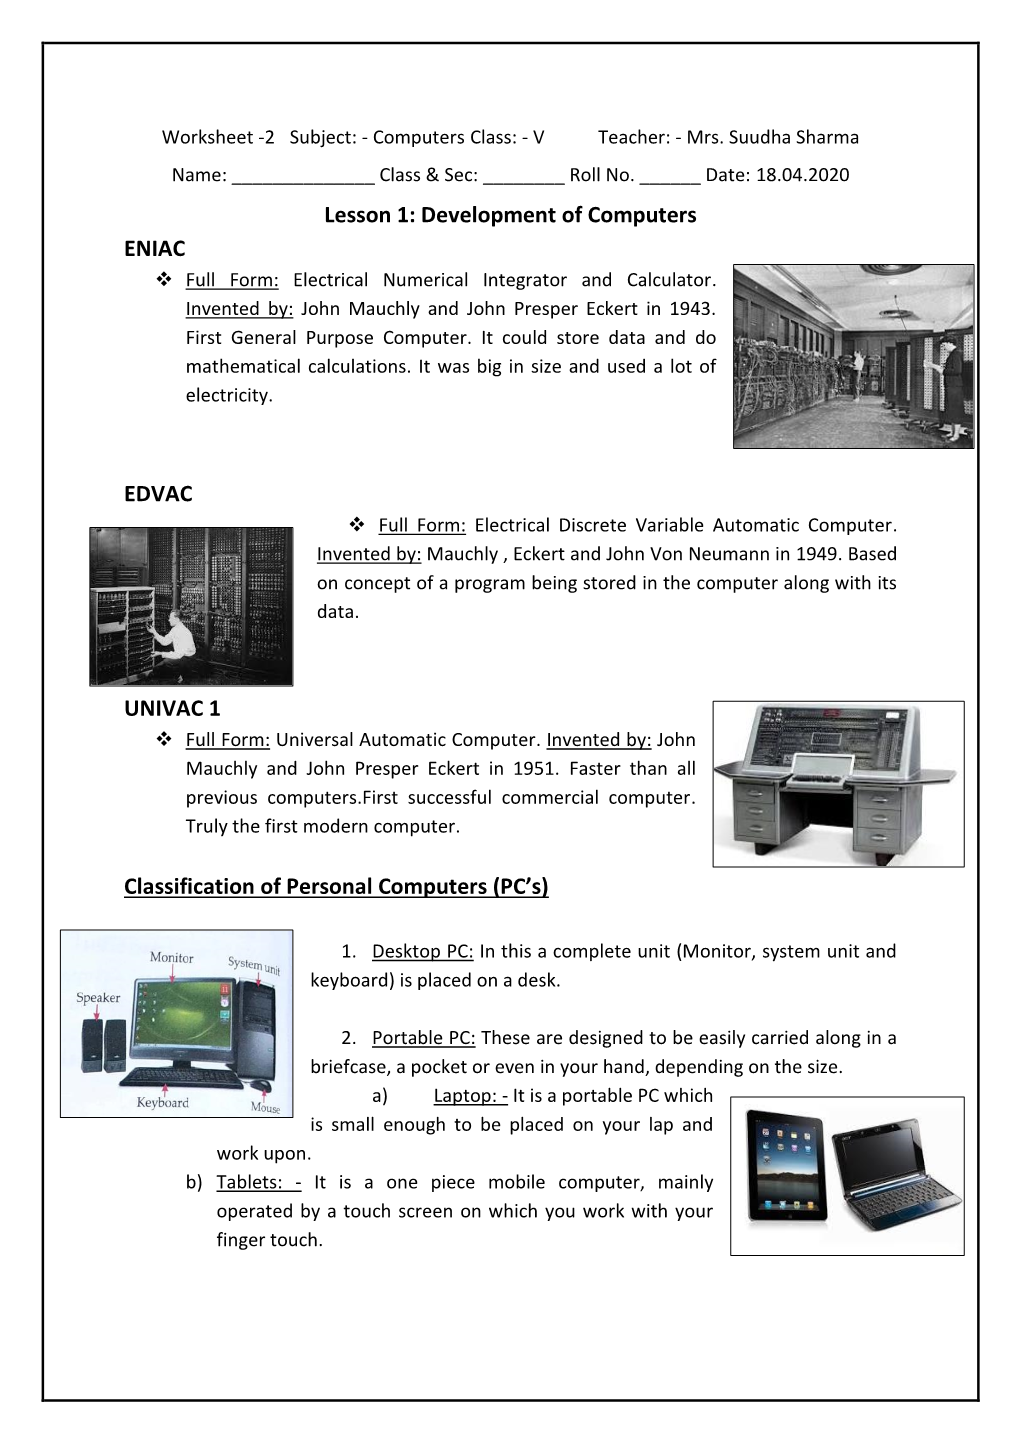 Lesson 1: Development of Computers ENIAC EDVAC UNIVAC 1 Classification of Personal Computers (PC's)